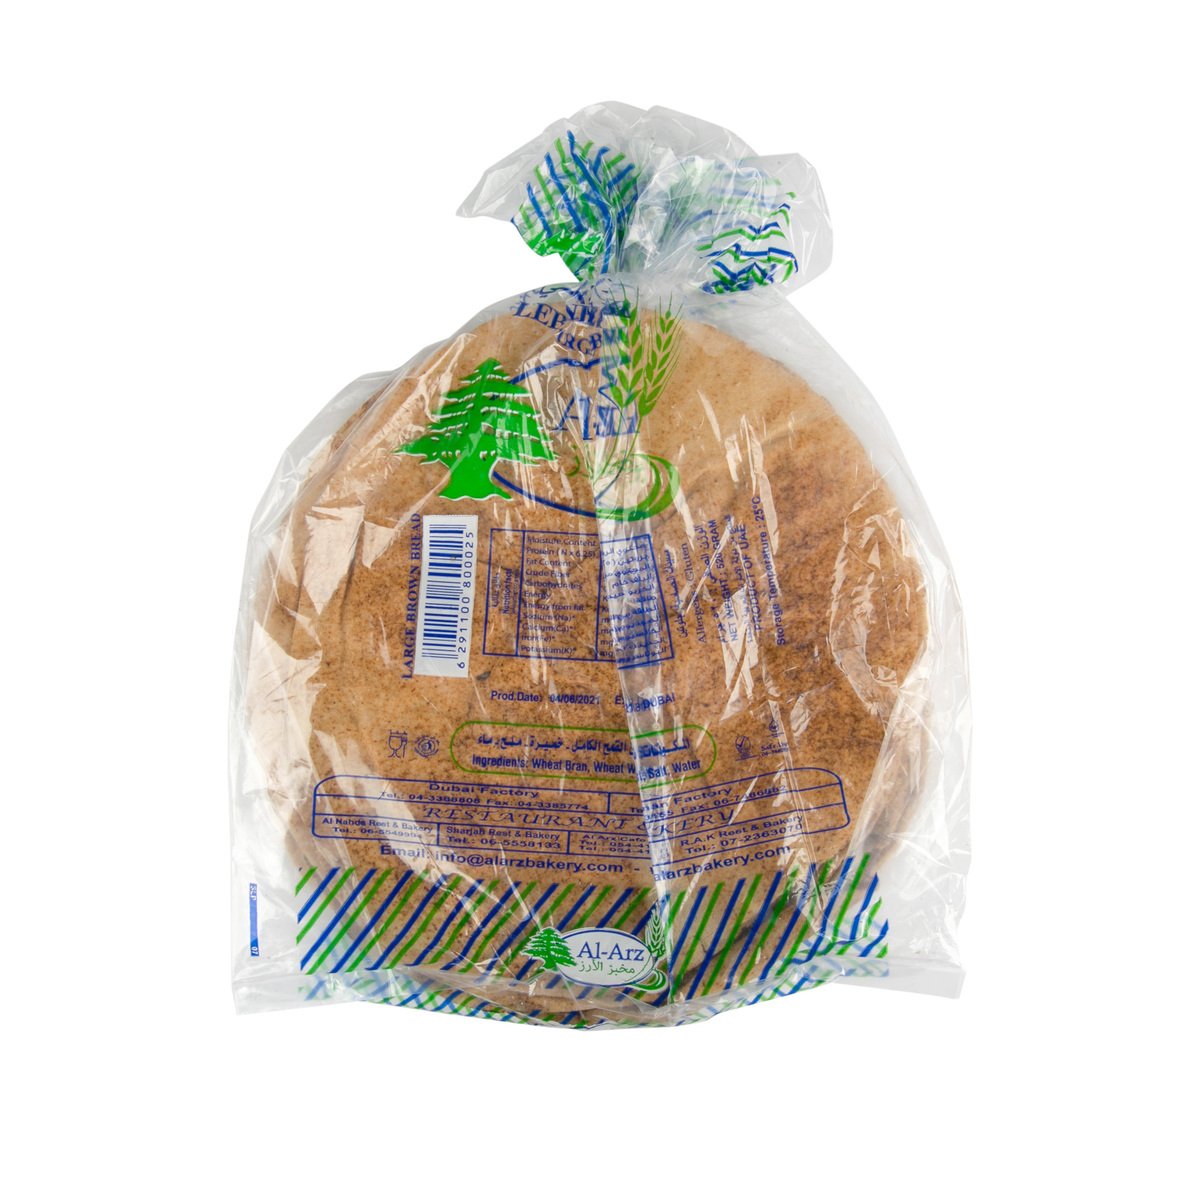 Al Arz Brown Arabic Bread 5 pcs